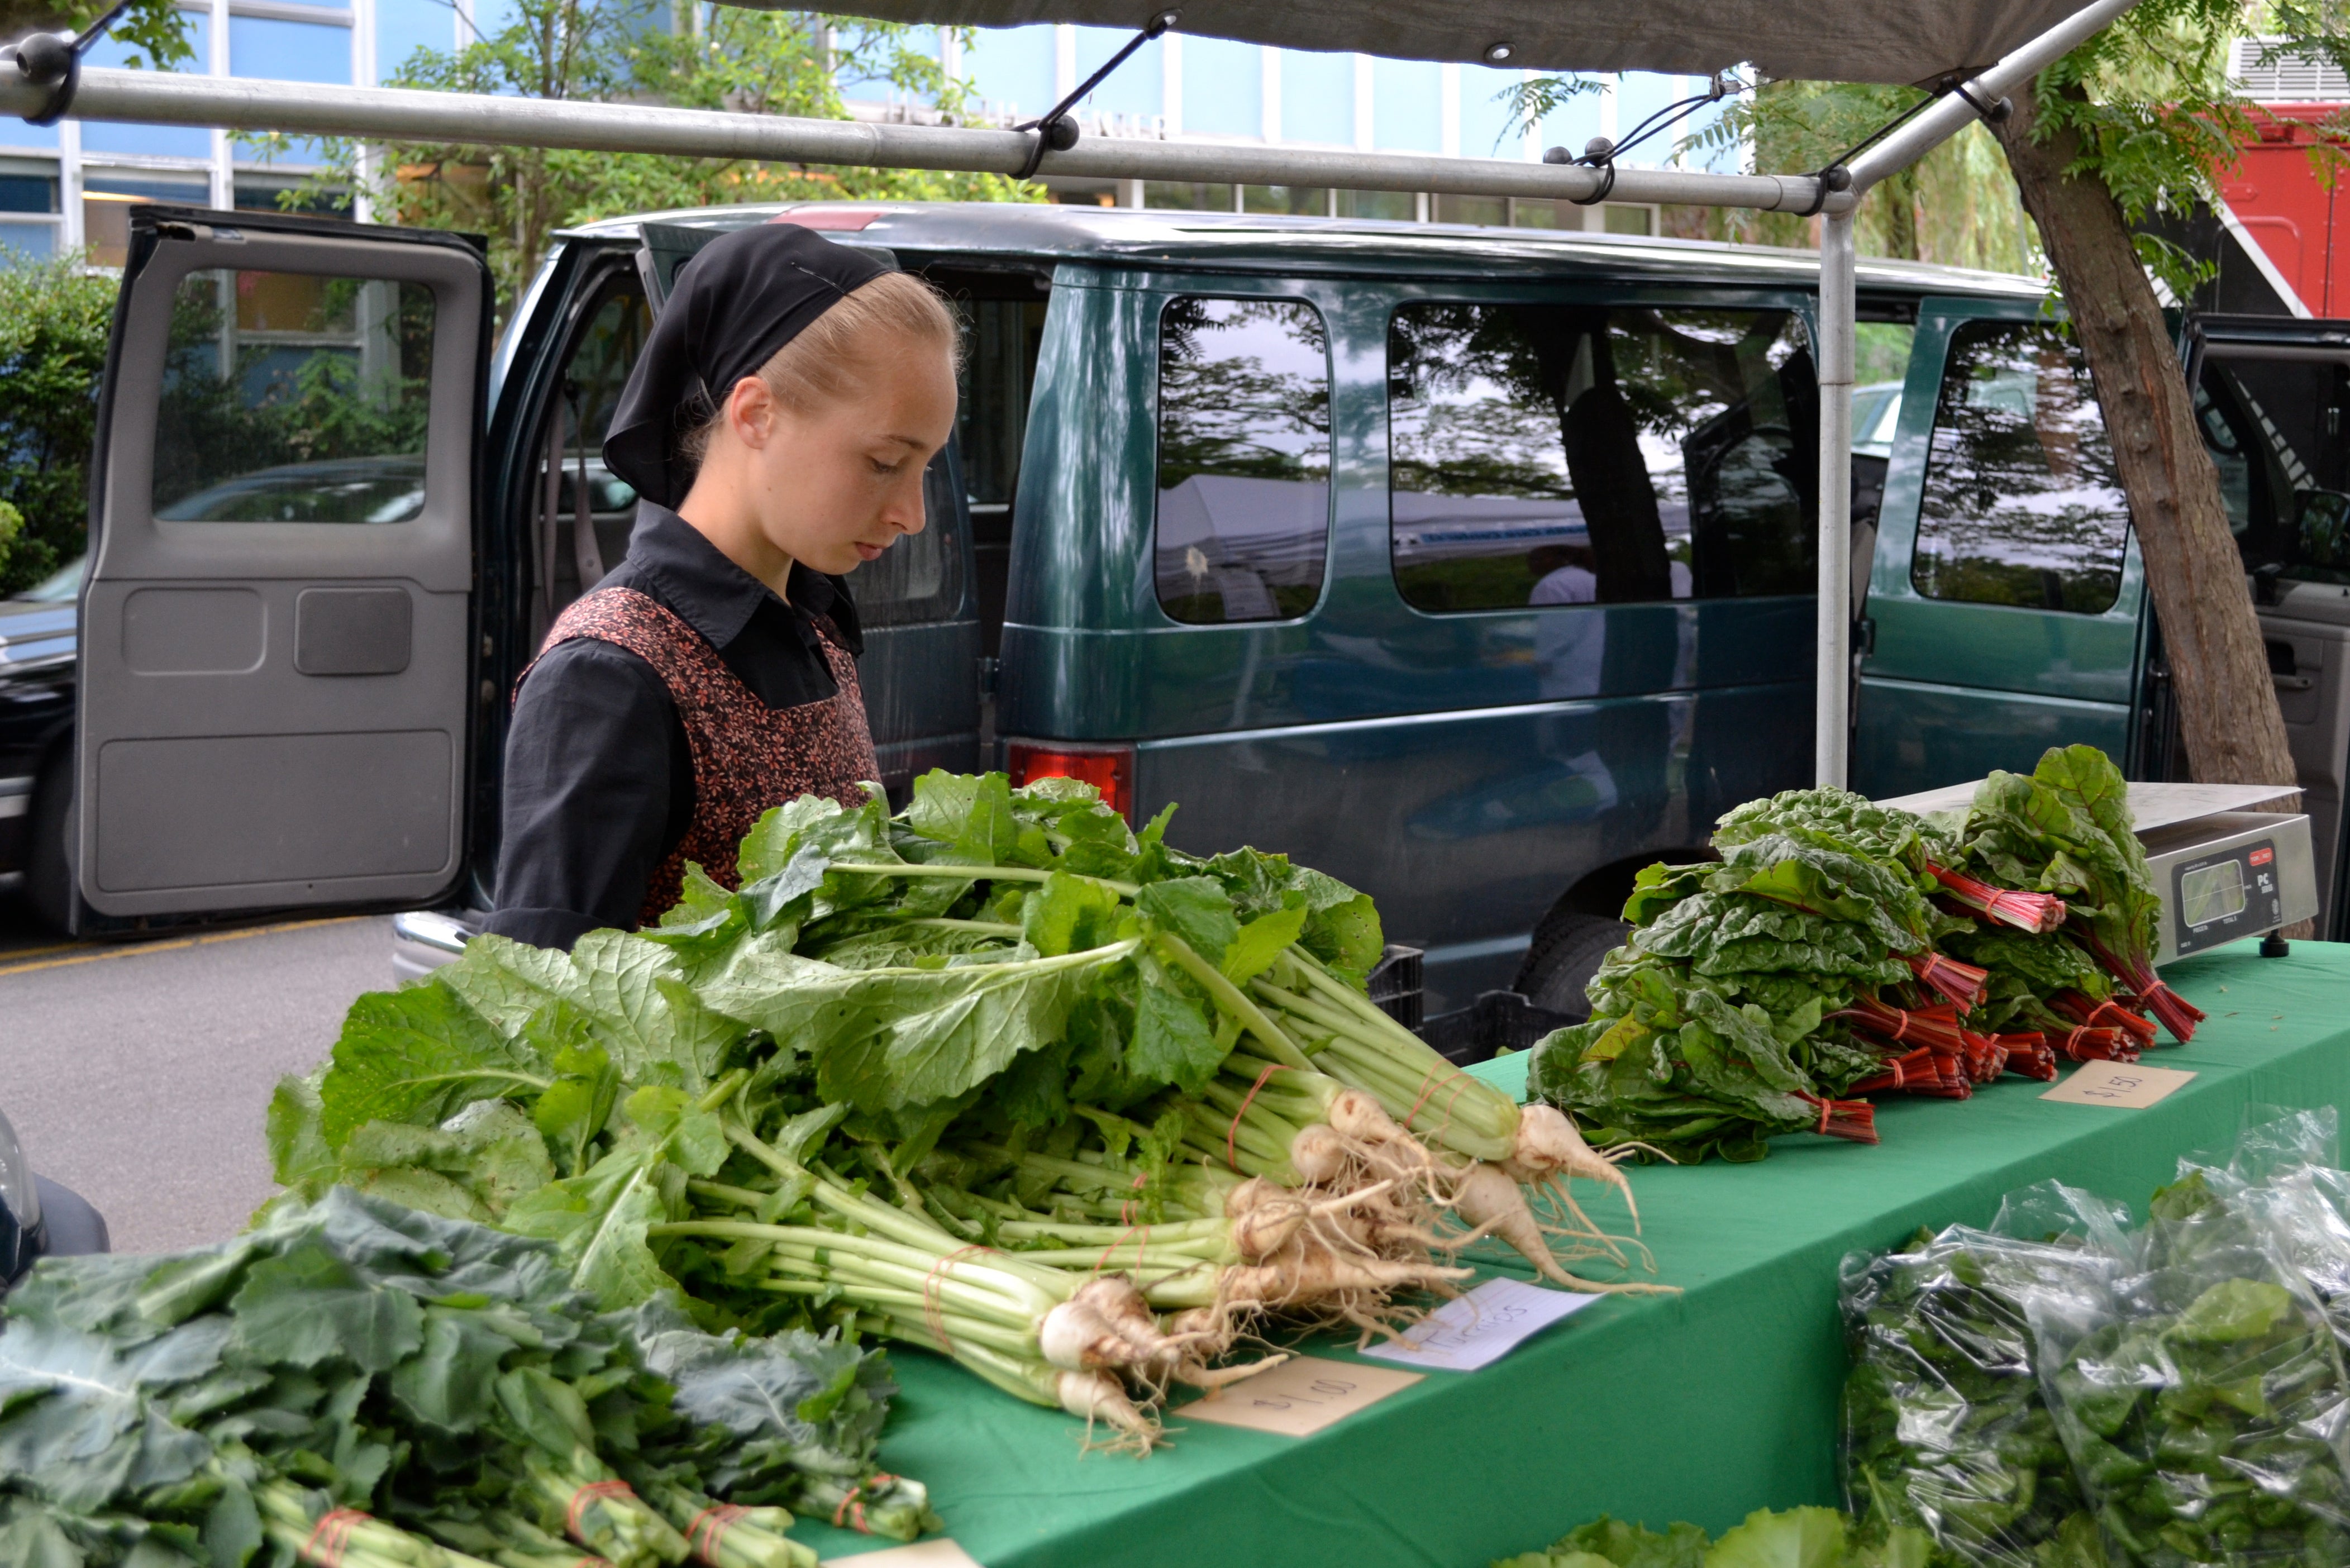 The Thursday farmers' market returned to Clark Park this week